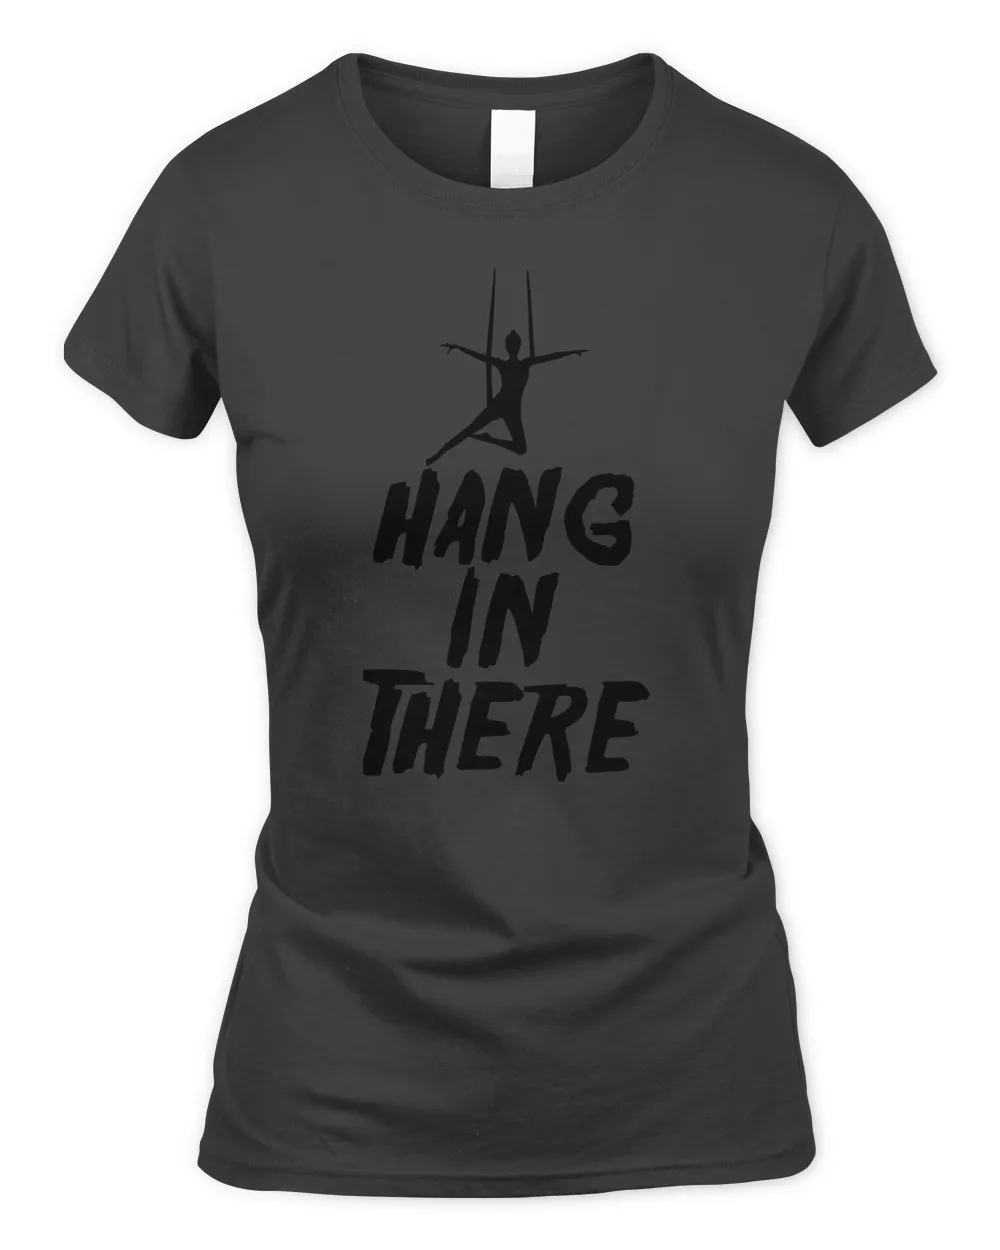 Hang In There Tee Shirts Women Aerial Skills Yoga T Shirt